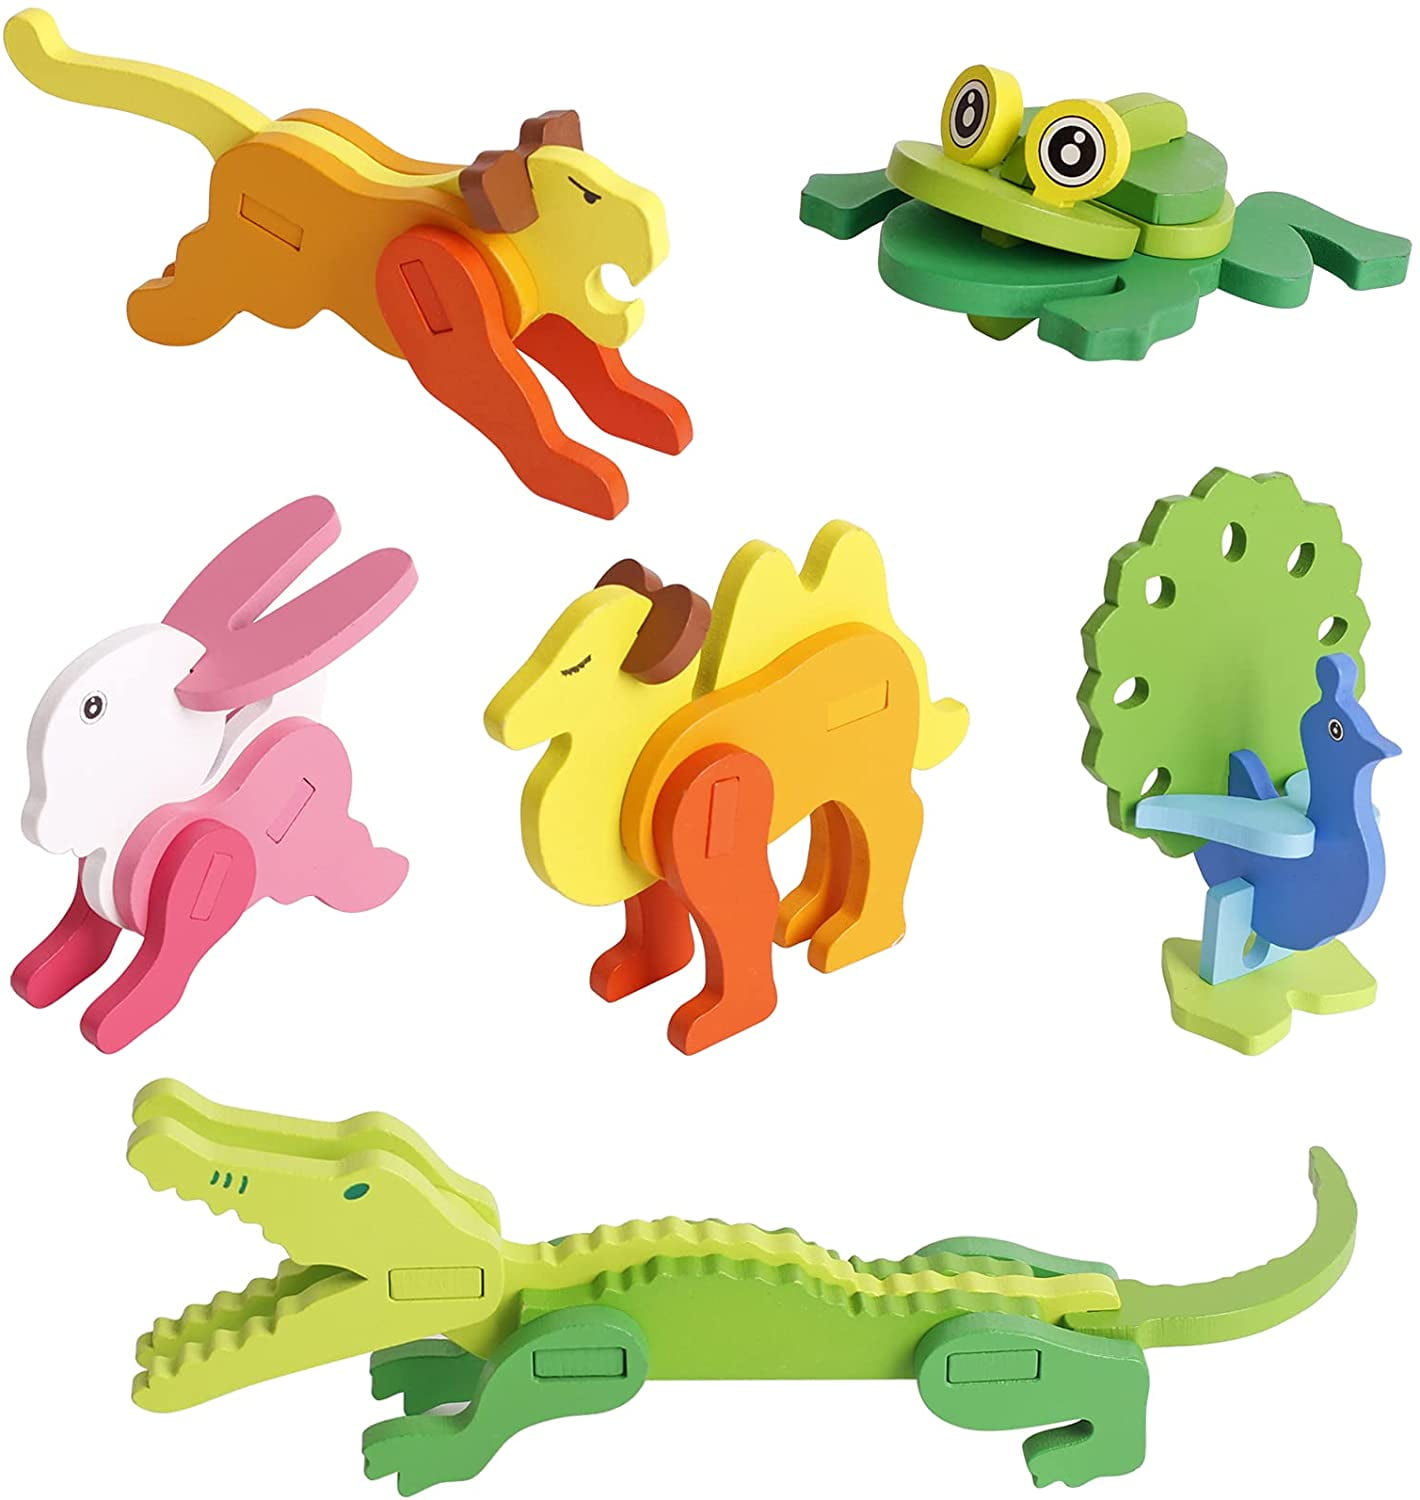 3D Wooden Jigsaws 4 Pack Animal Puzzle Kids Children Gift Present Baby Toddler 